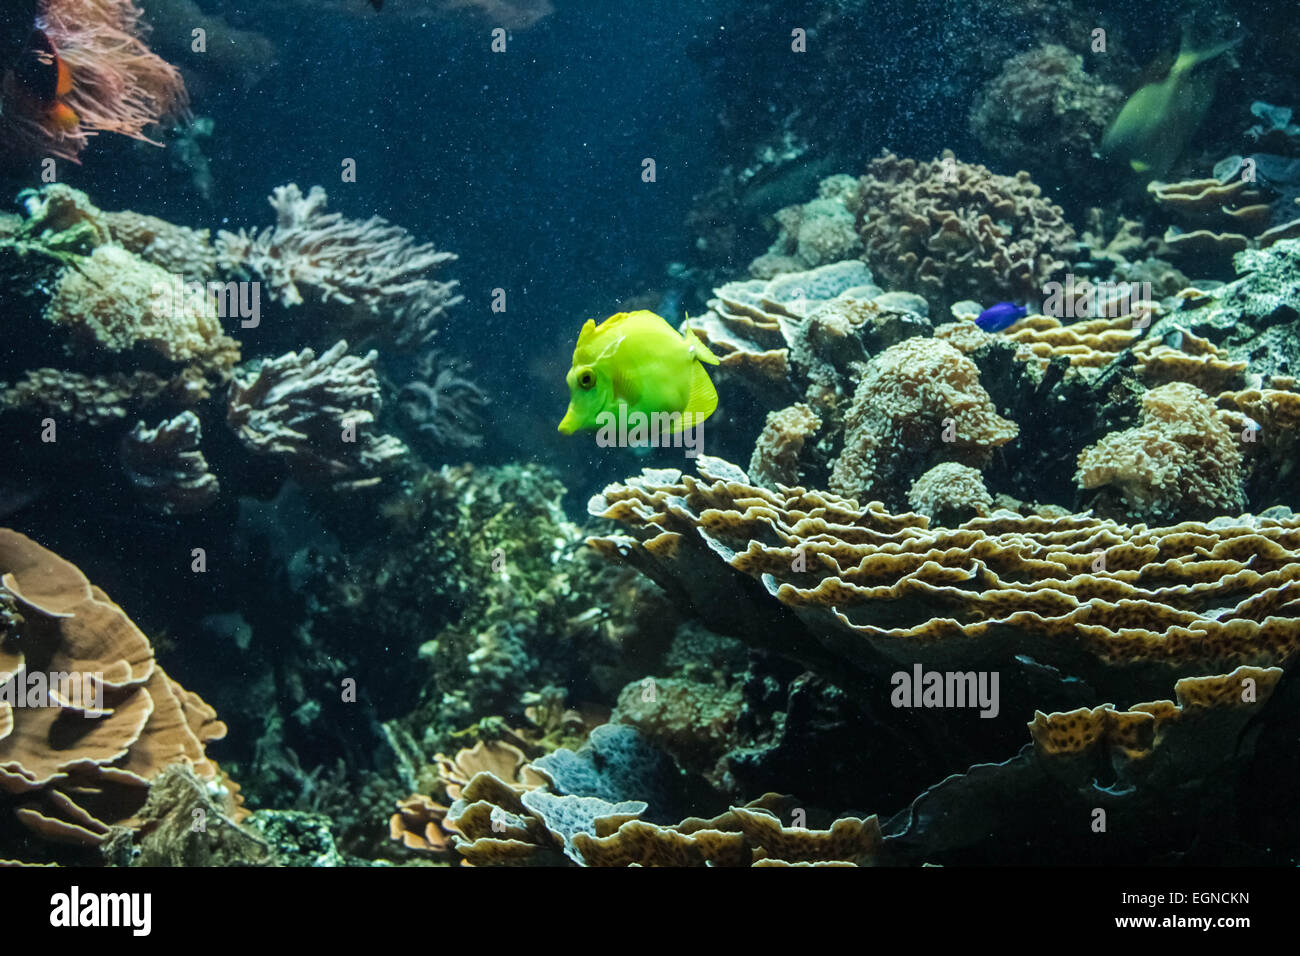 yellow coral fish Stock Photo